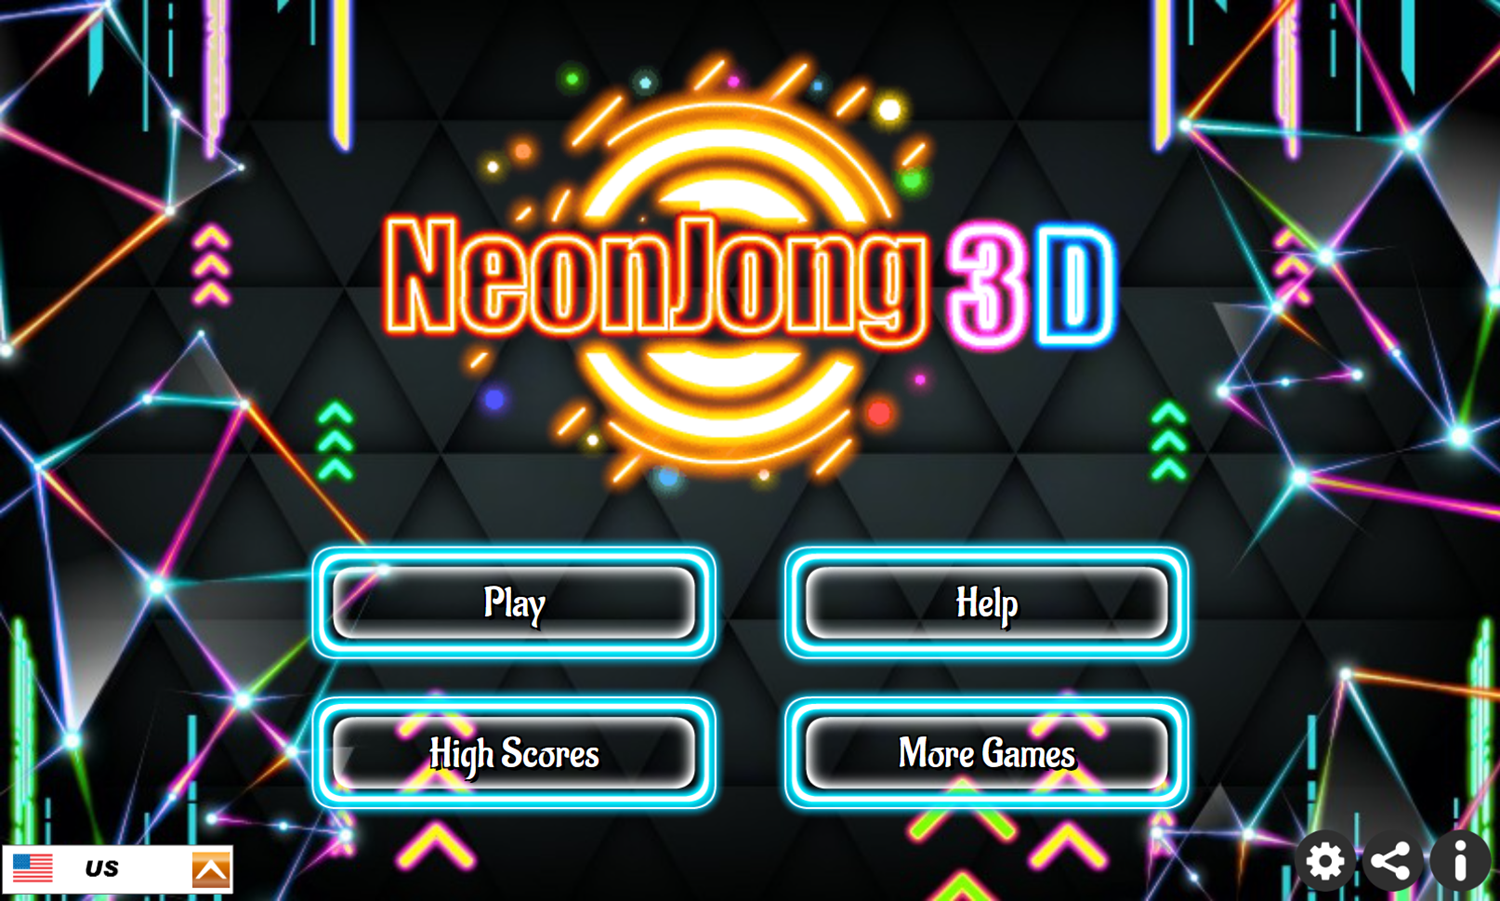 Neonjong 3D Game Welcome Screen Screenshot.